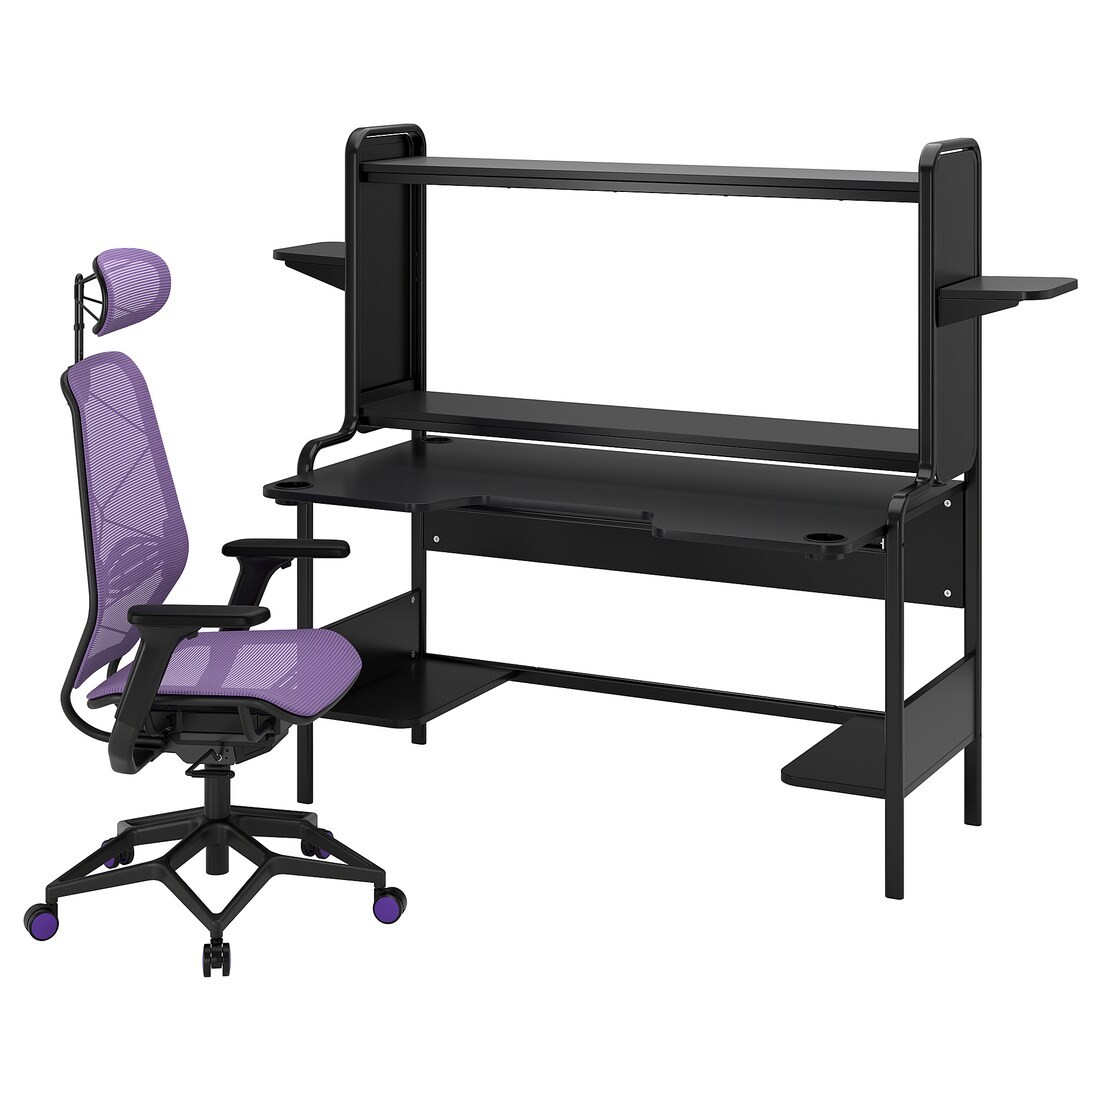 FREDDE / STYRSPEL Геймерский стол и стул, черный / фиолетовый